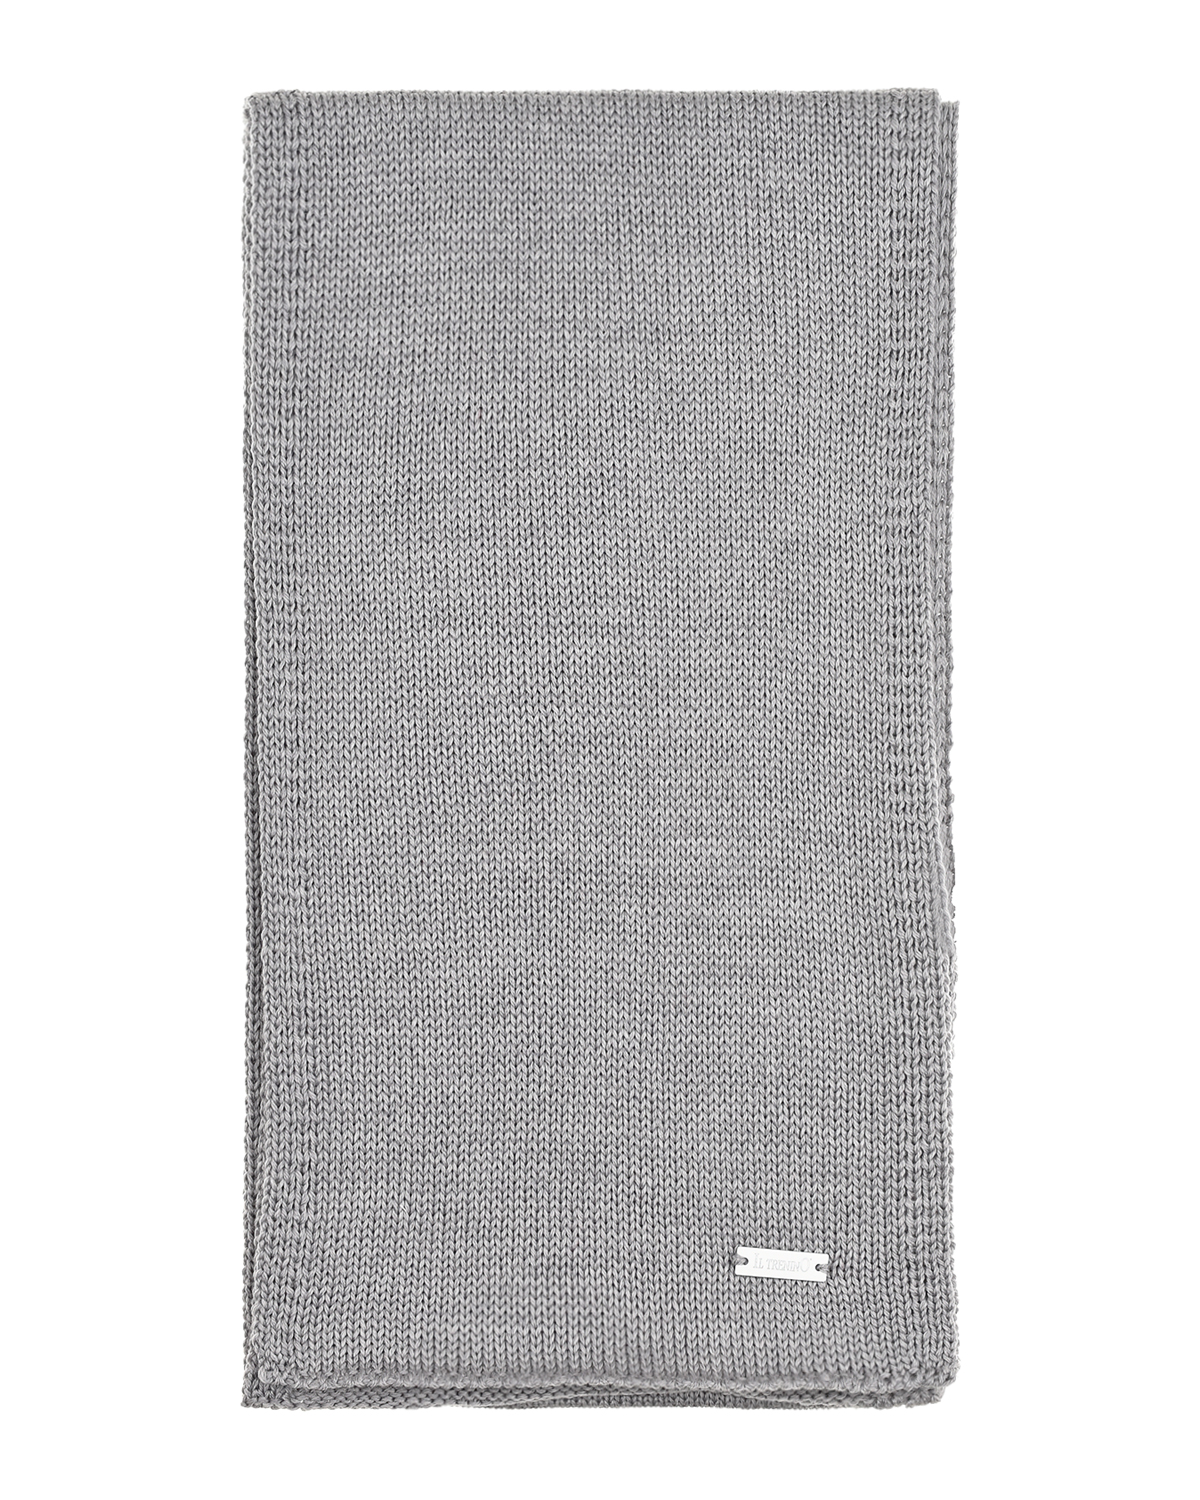 Серый шарф 134х20 см. Il Trenino детский, размер unica - фото 2